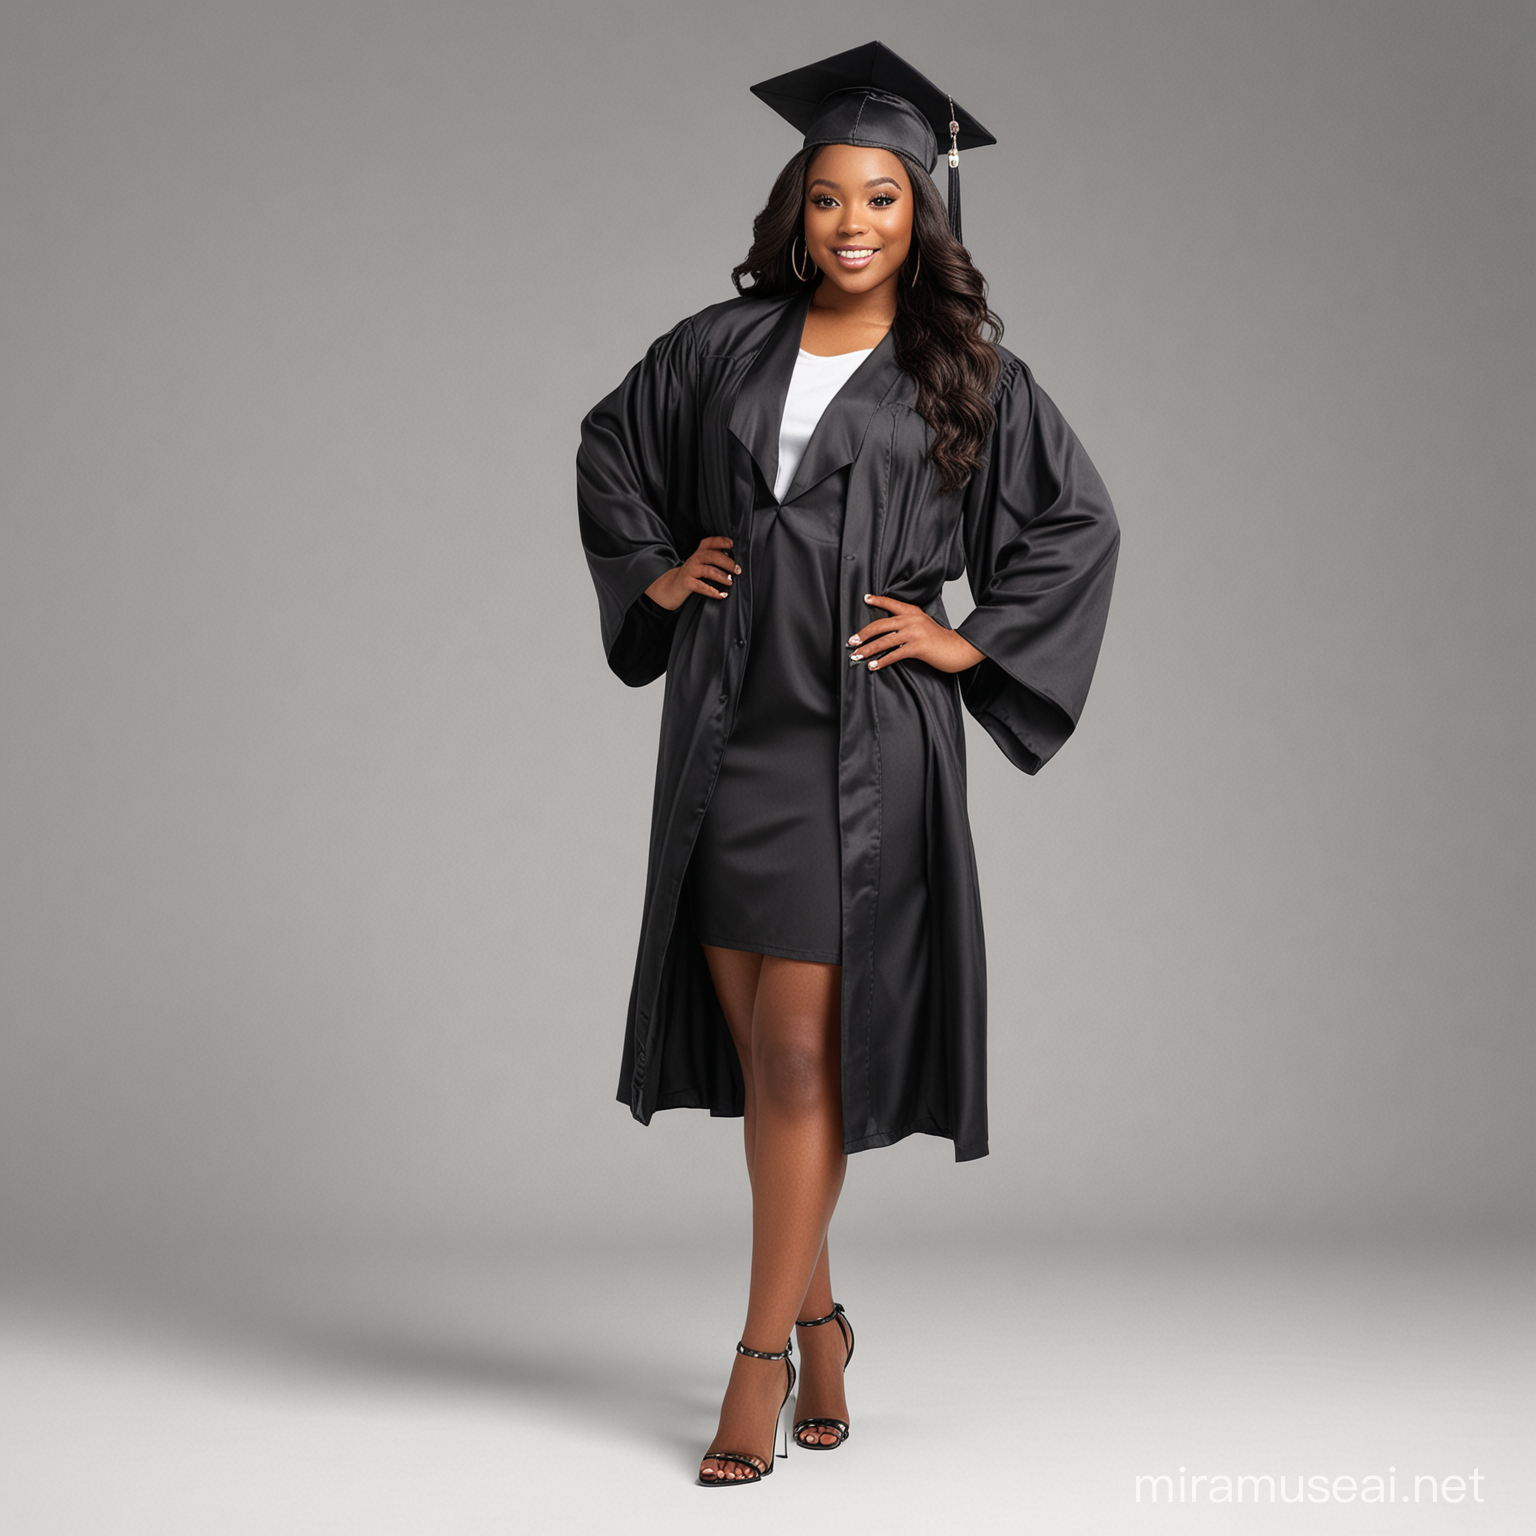 Stylish Black Female Graduate Poses in Elegant Cap and Gown